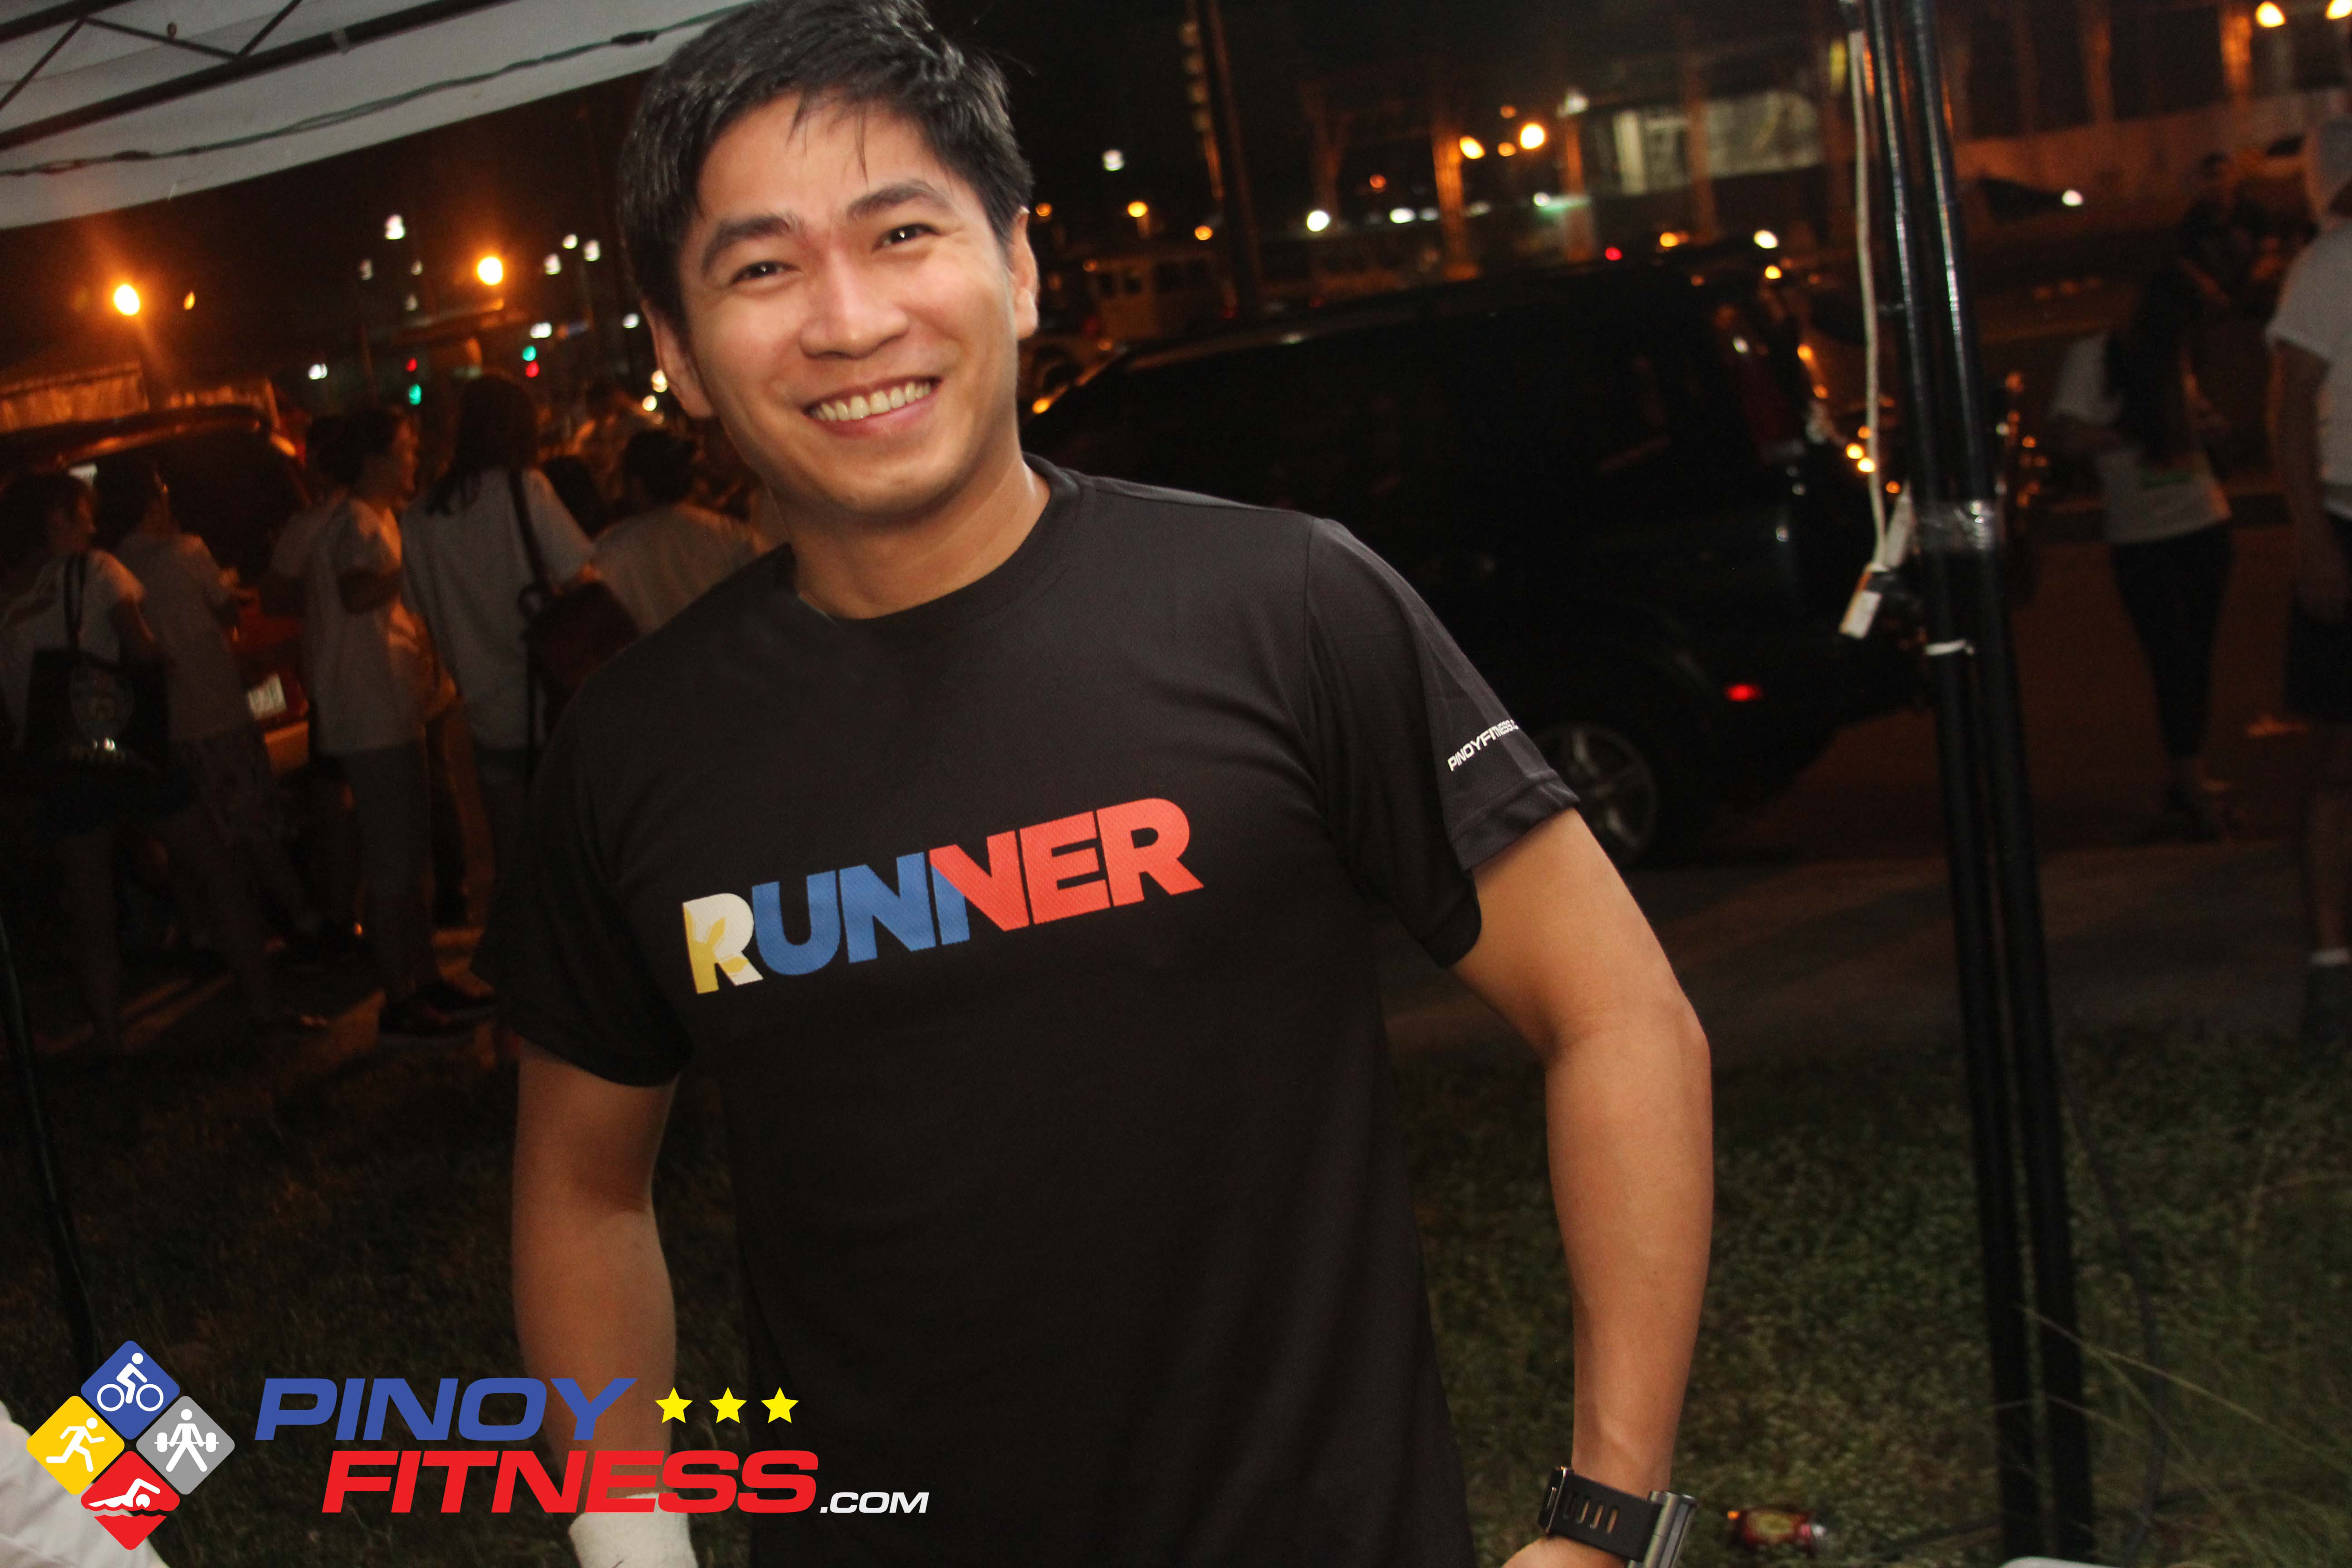 Color Manila Run 2 - 2014